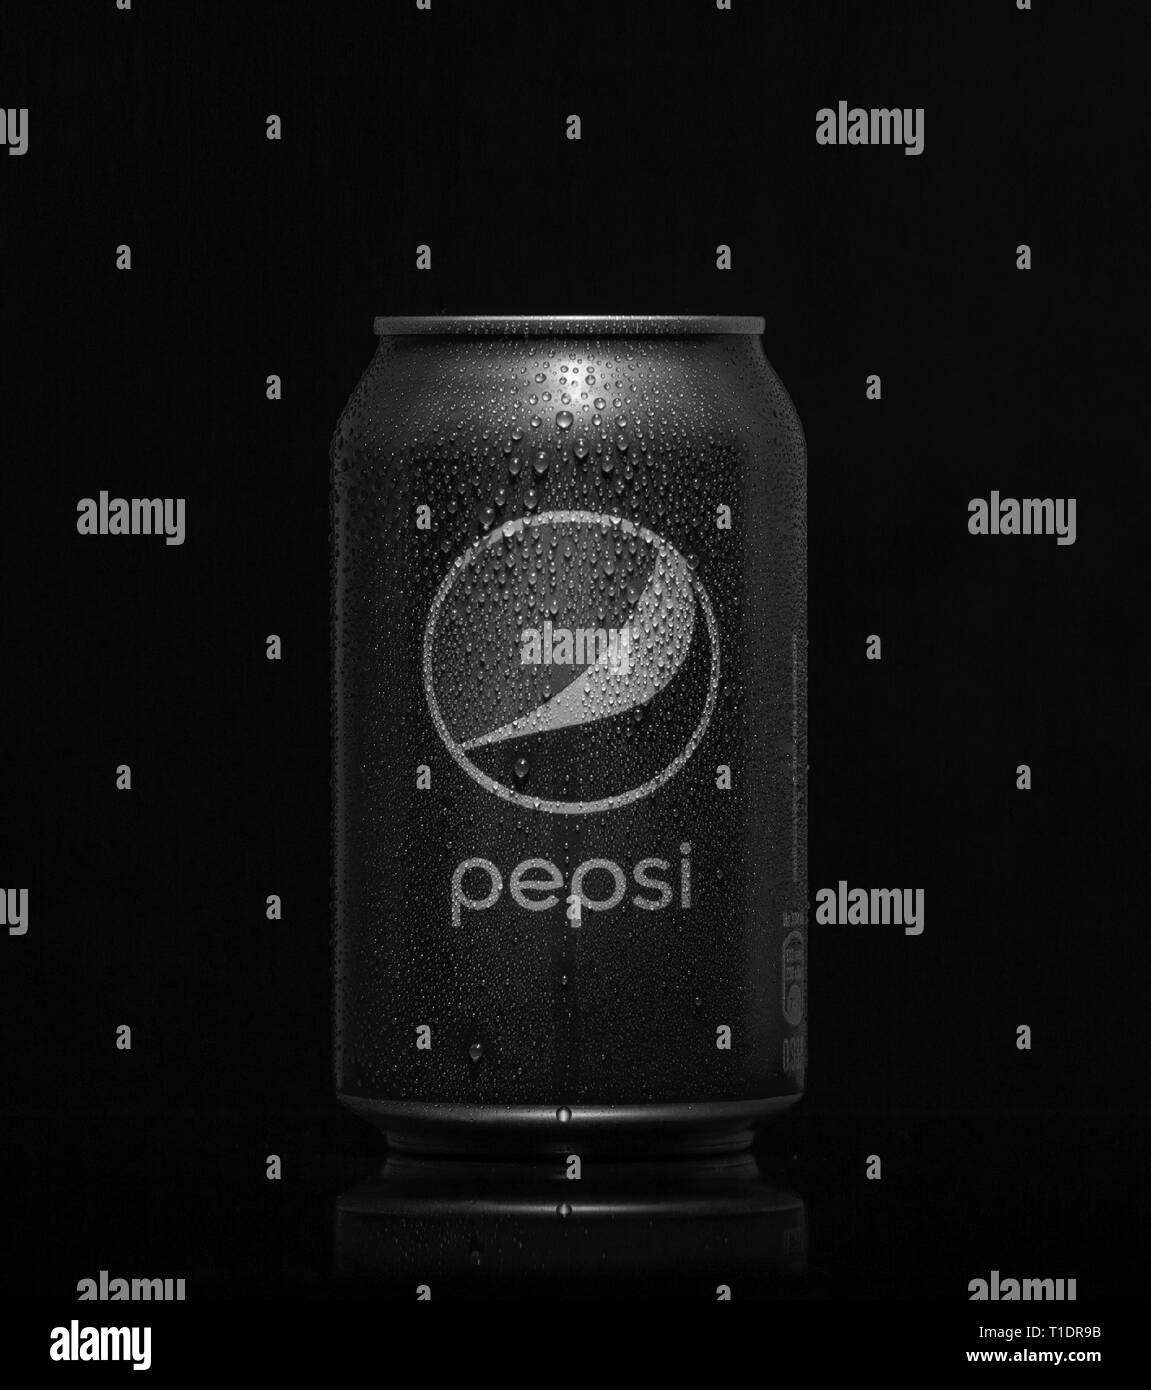 Pepsi cola company Black and White Stock Photos & Images - Alamy